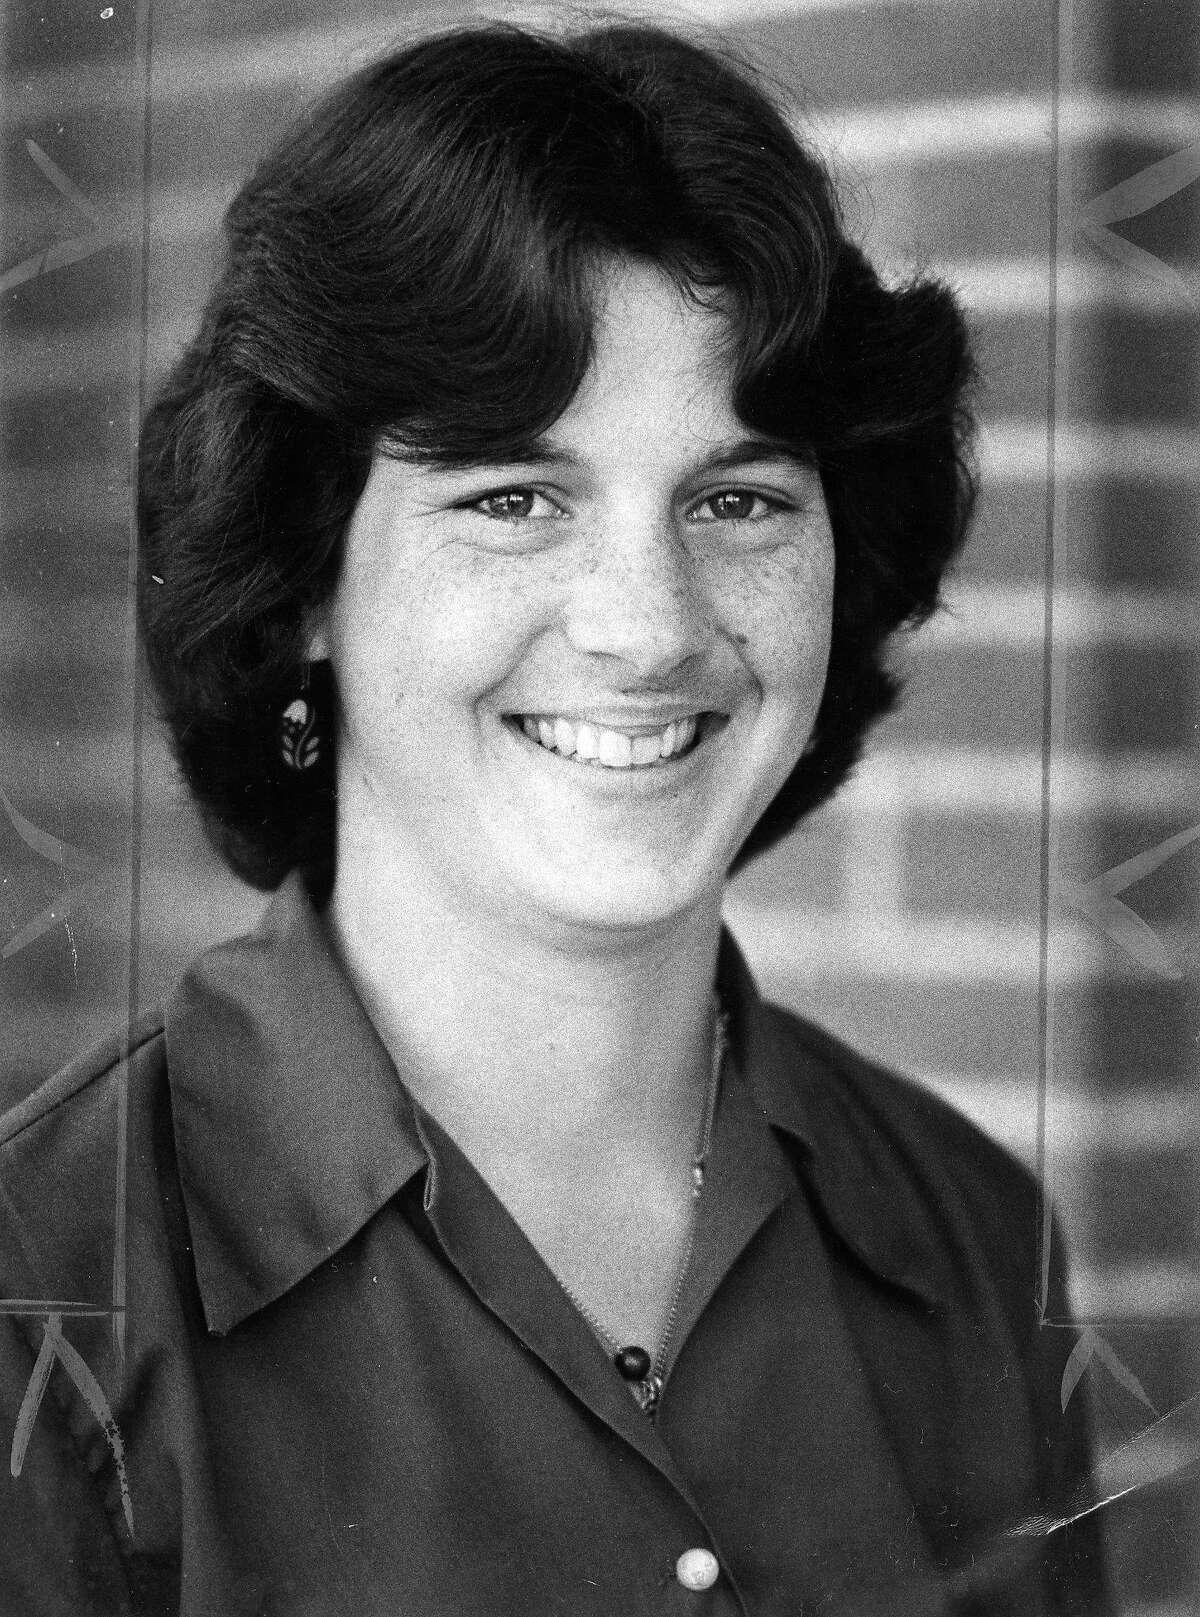 Colleen Galloway, photographed May 5, 1977. Basketball star, Hayward High School - athletic scholarship to U.C. Berkeley.